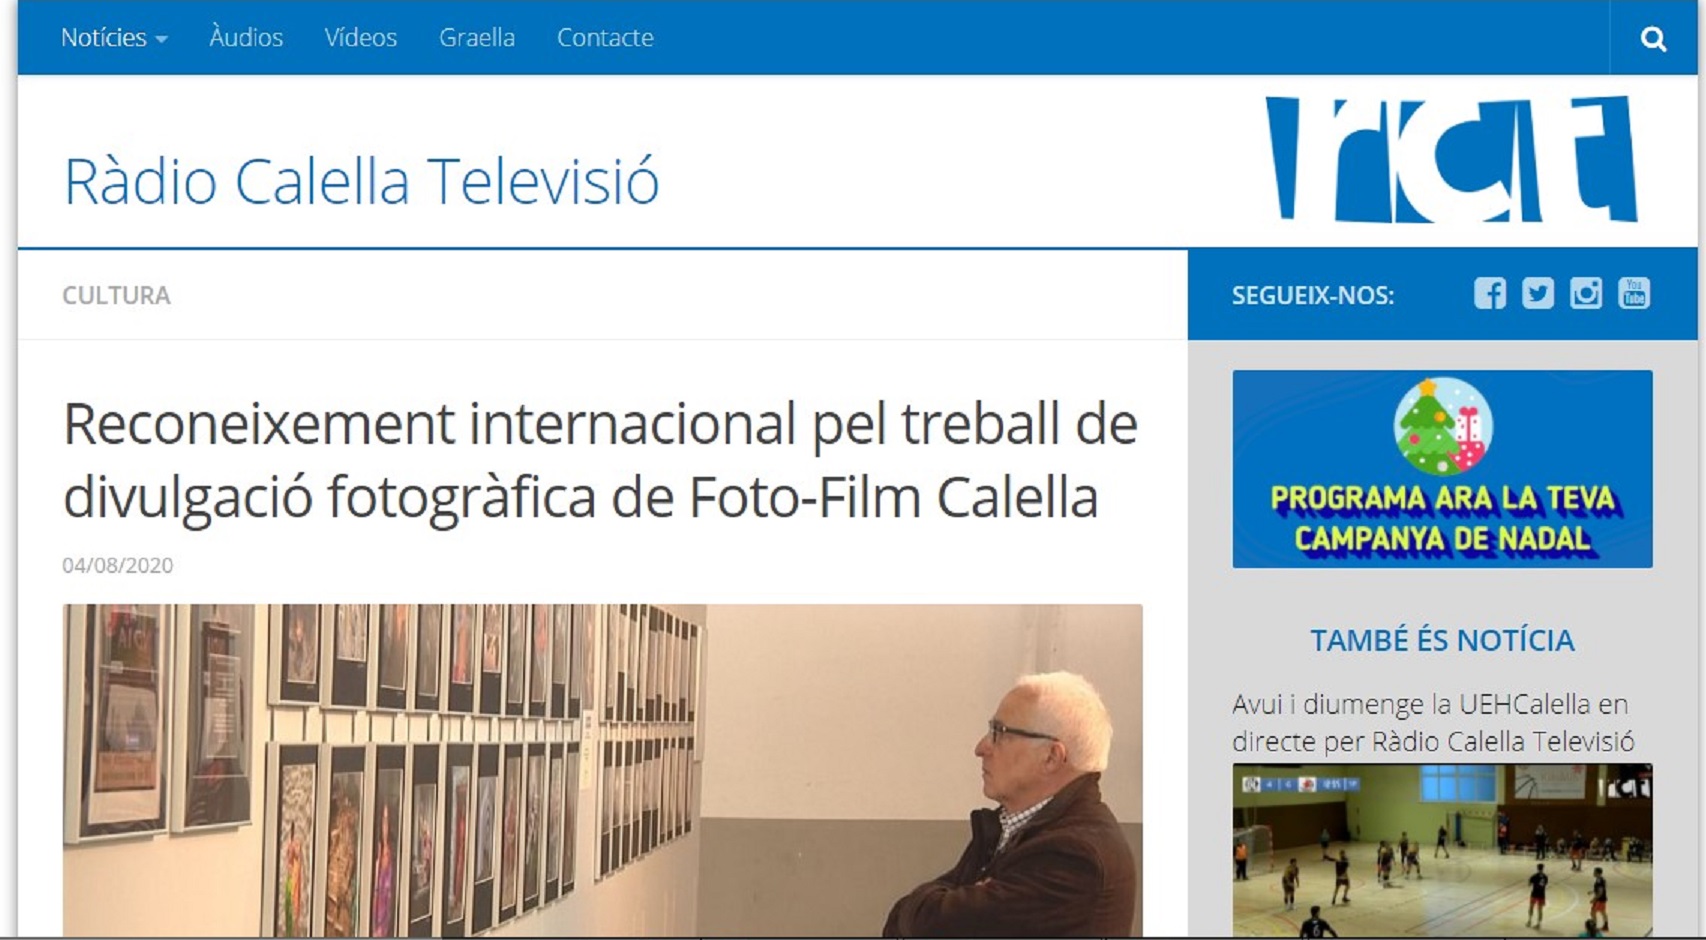 Foto-Film Calella a Ràdio Calella TV- 04/08/2020 gabinete de prensa